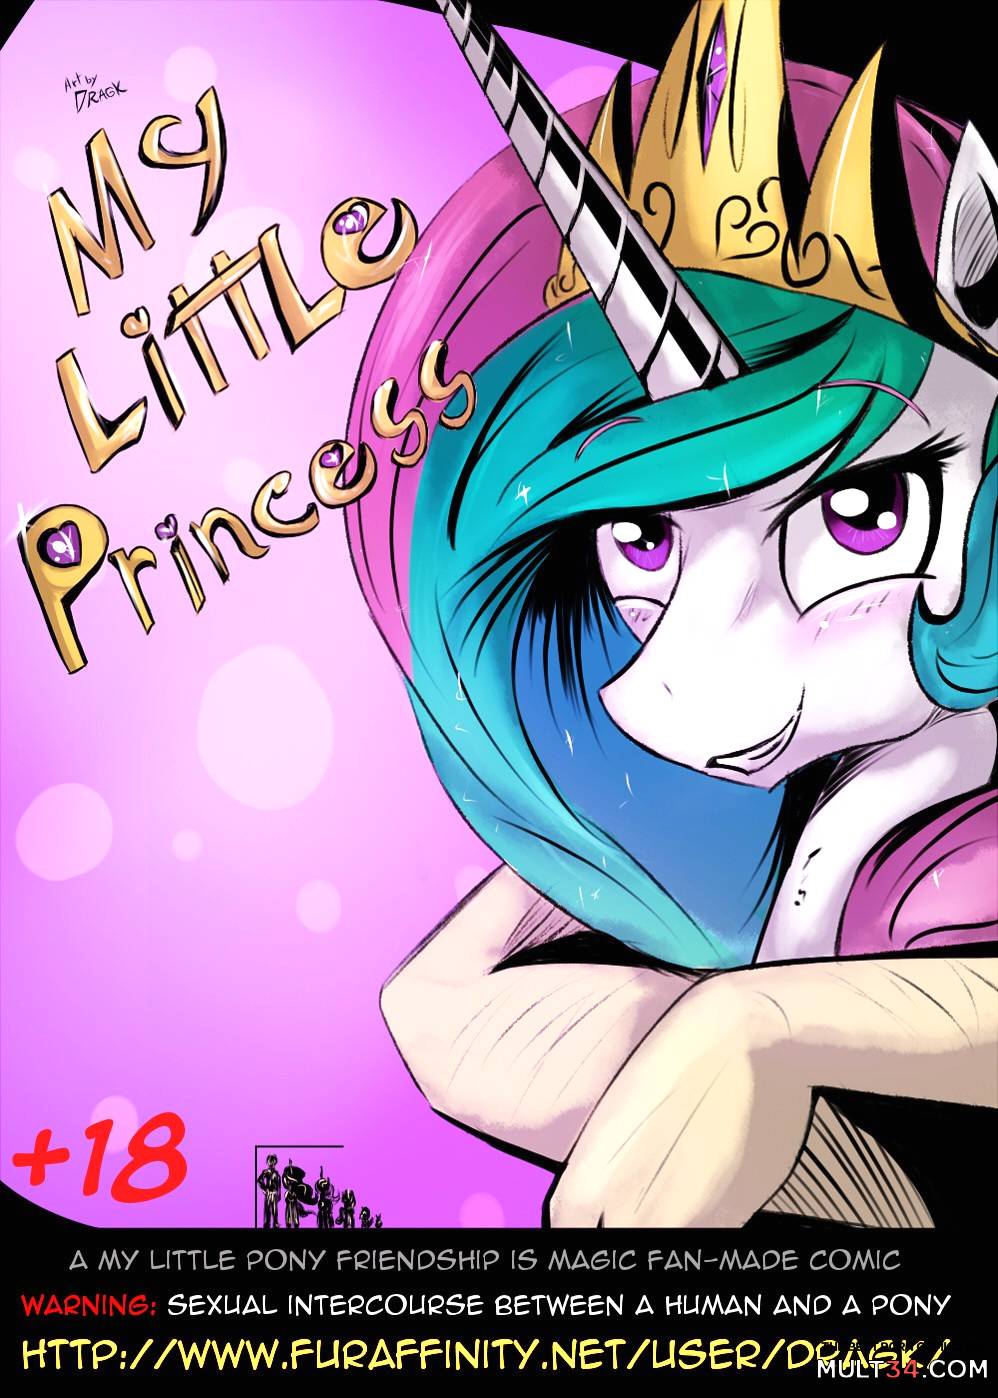 Little Princess Porn